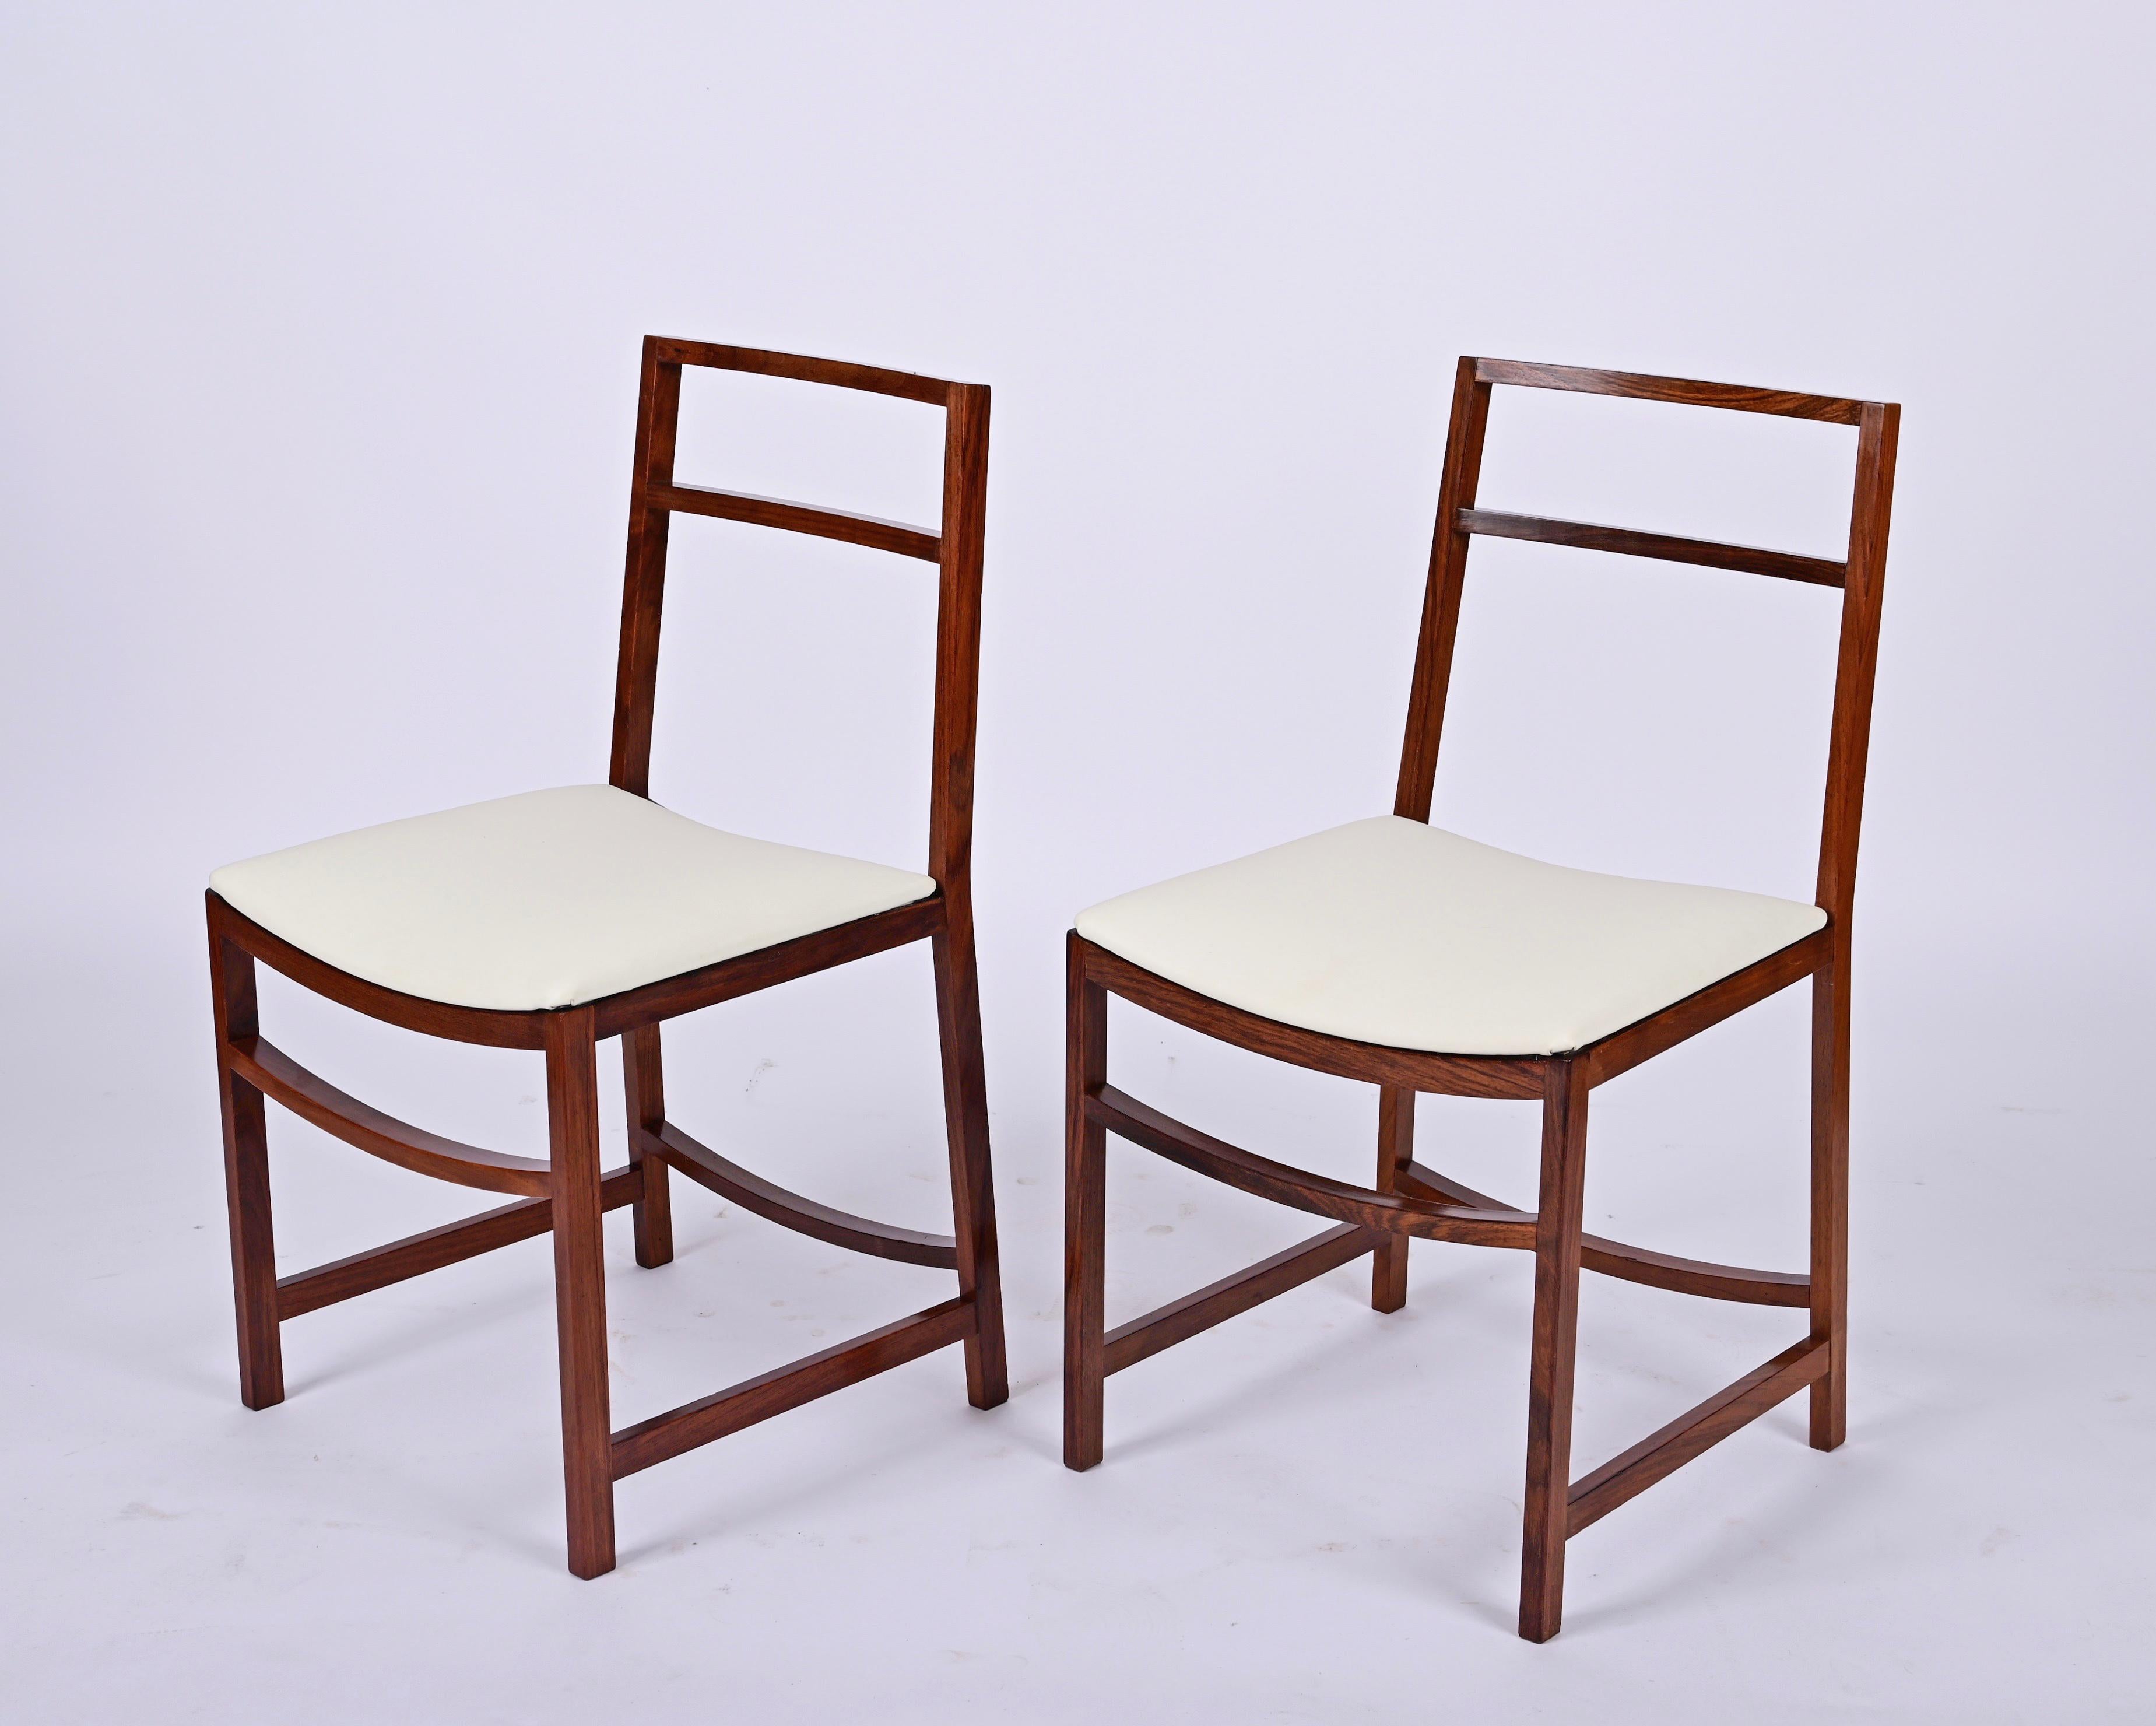 Midcentury Italian Dining Chairs in Teak, Renato Venturi for MIM Roma, 1960s For Sale 11